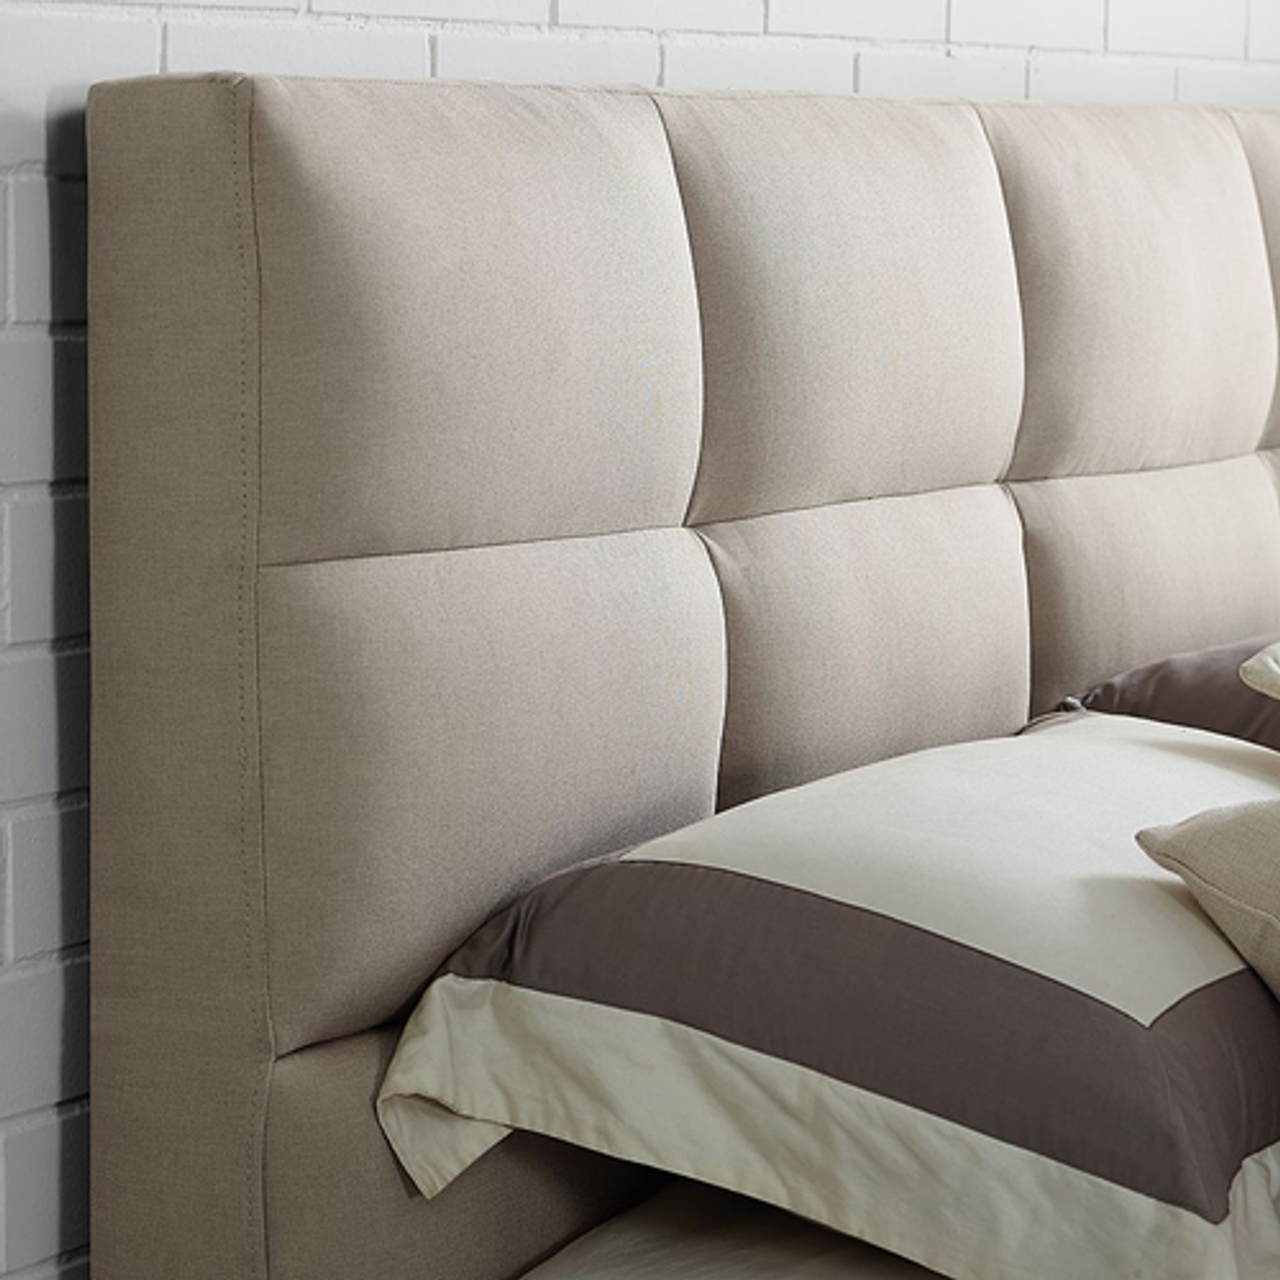 Serta - Zoey Upholstered Full Size Bed - Beige